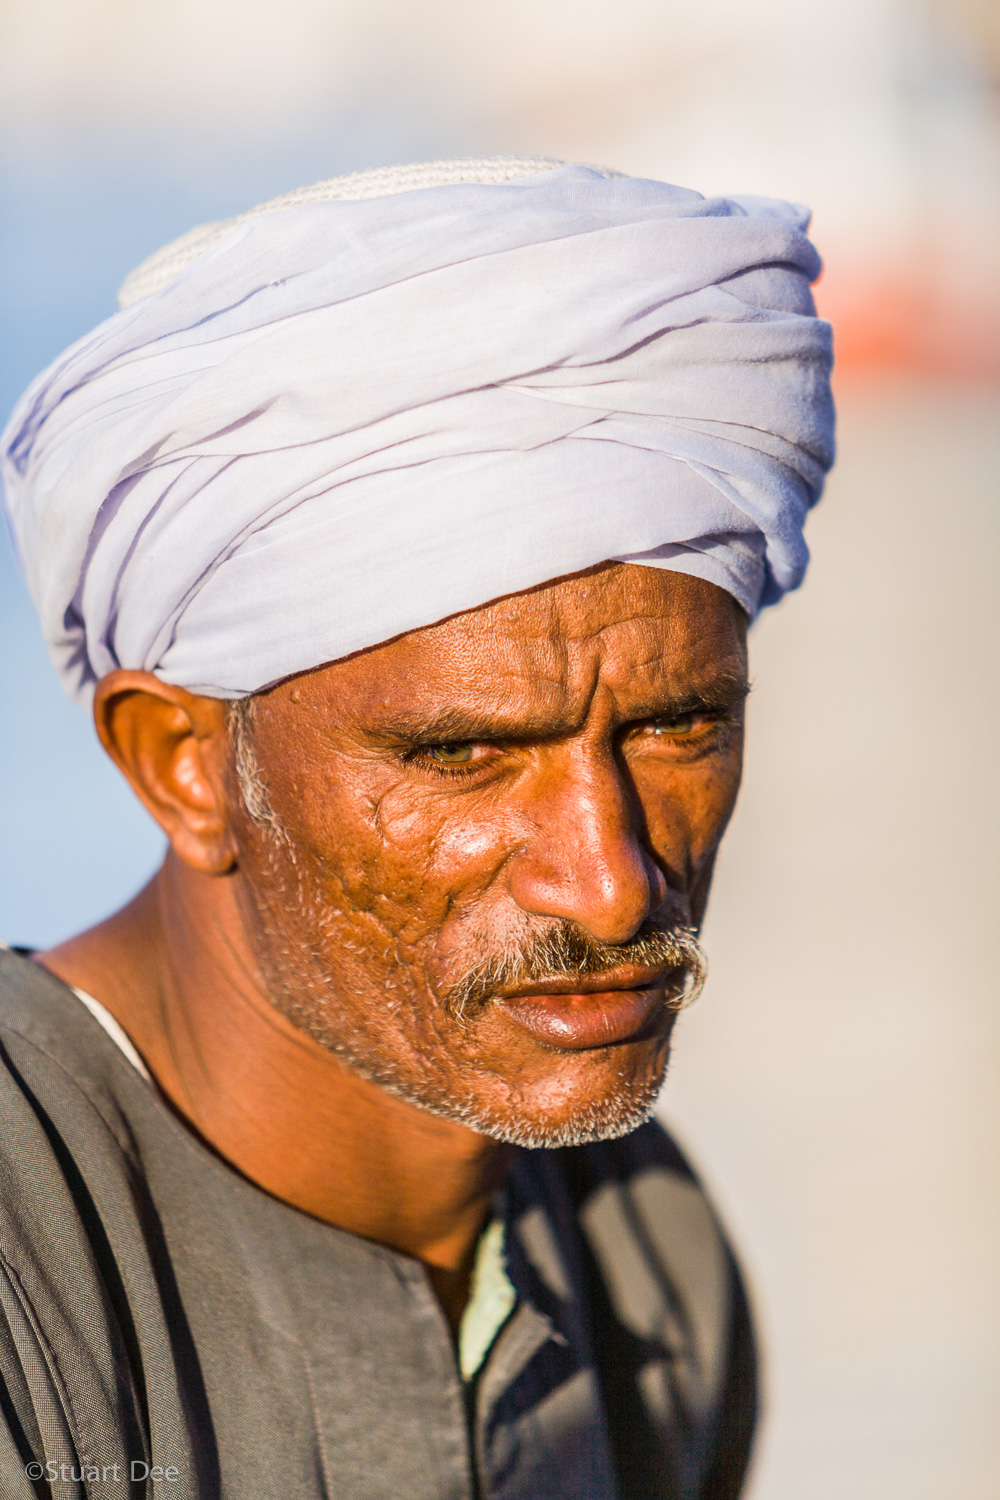  Portrait of boatman on a felucca, Nile River, Egypt 